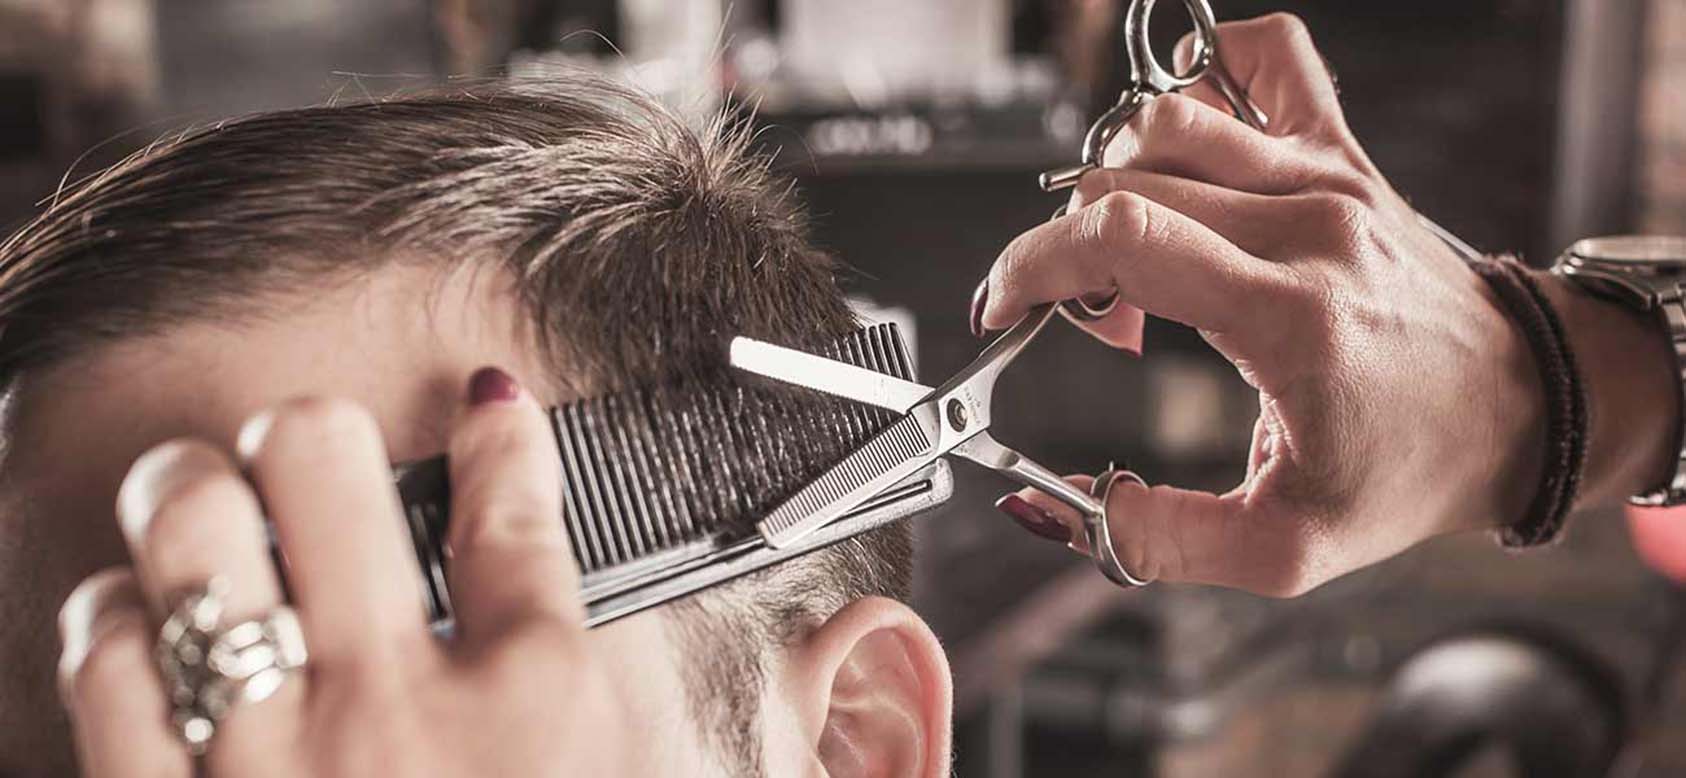 Adagio Salon Syracuse. NY Men's Hair Styling, Cut, Color